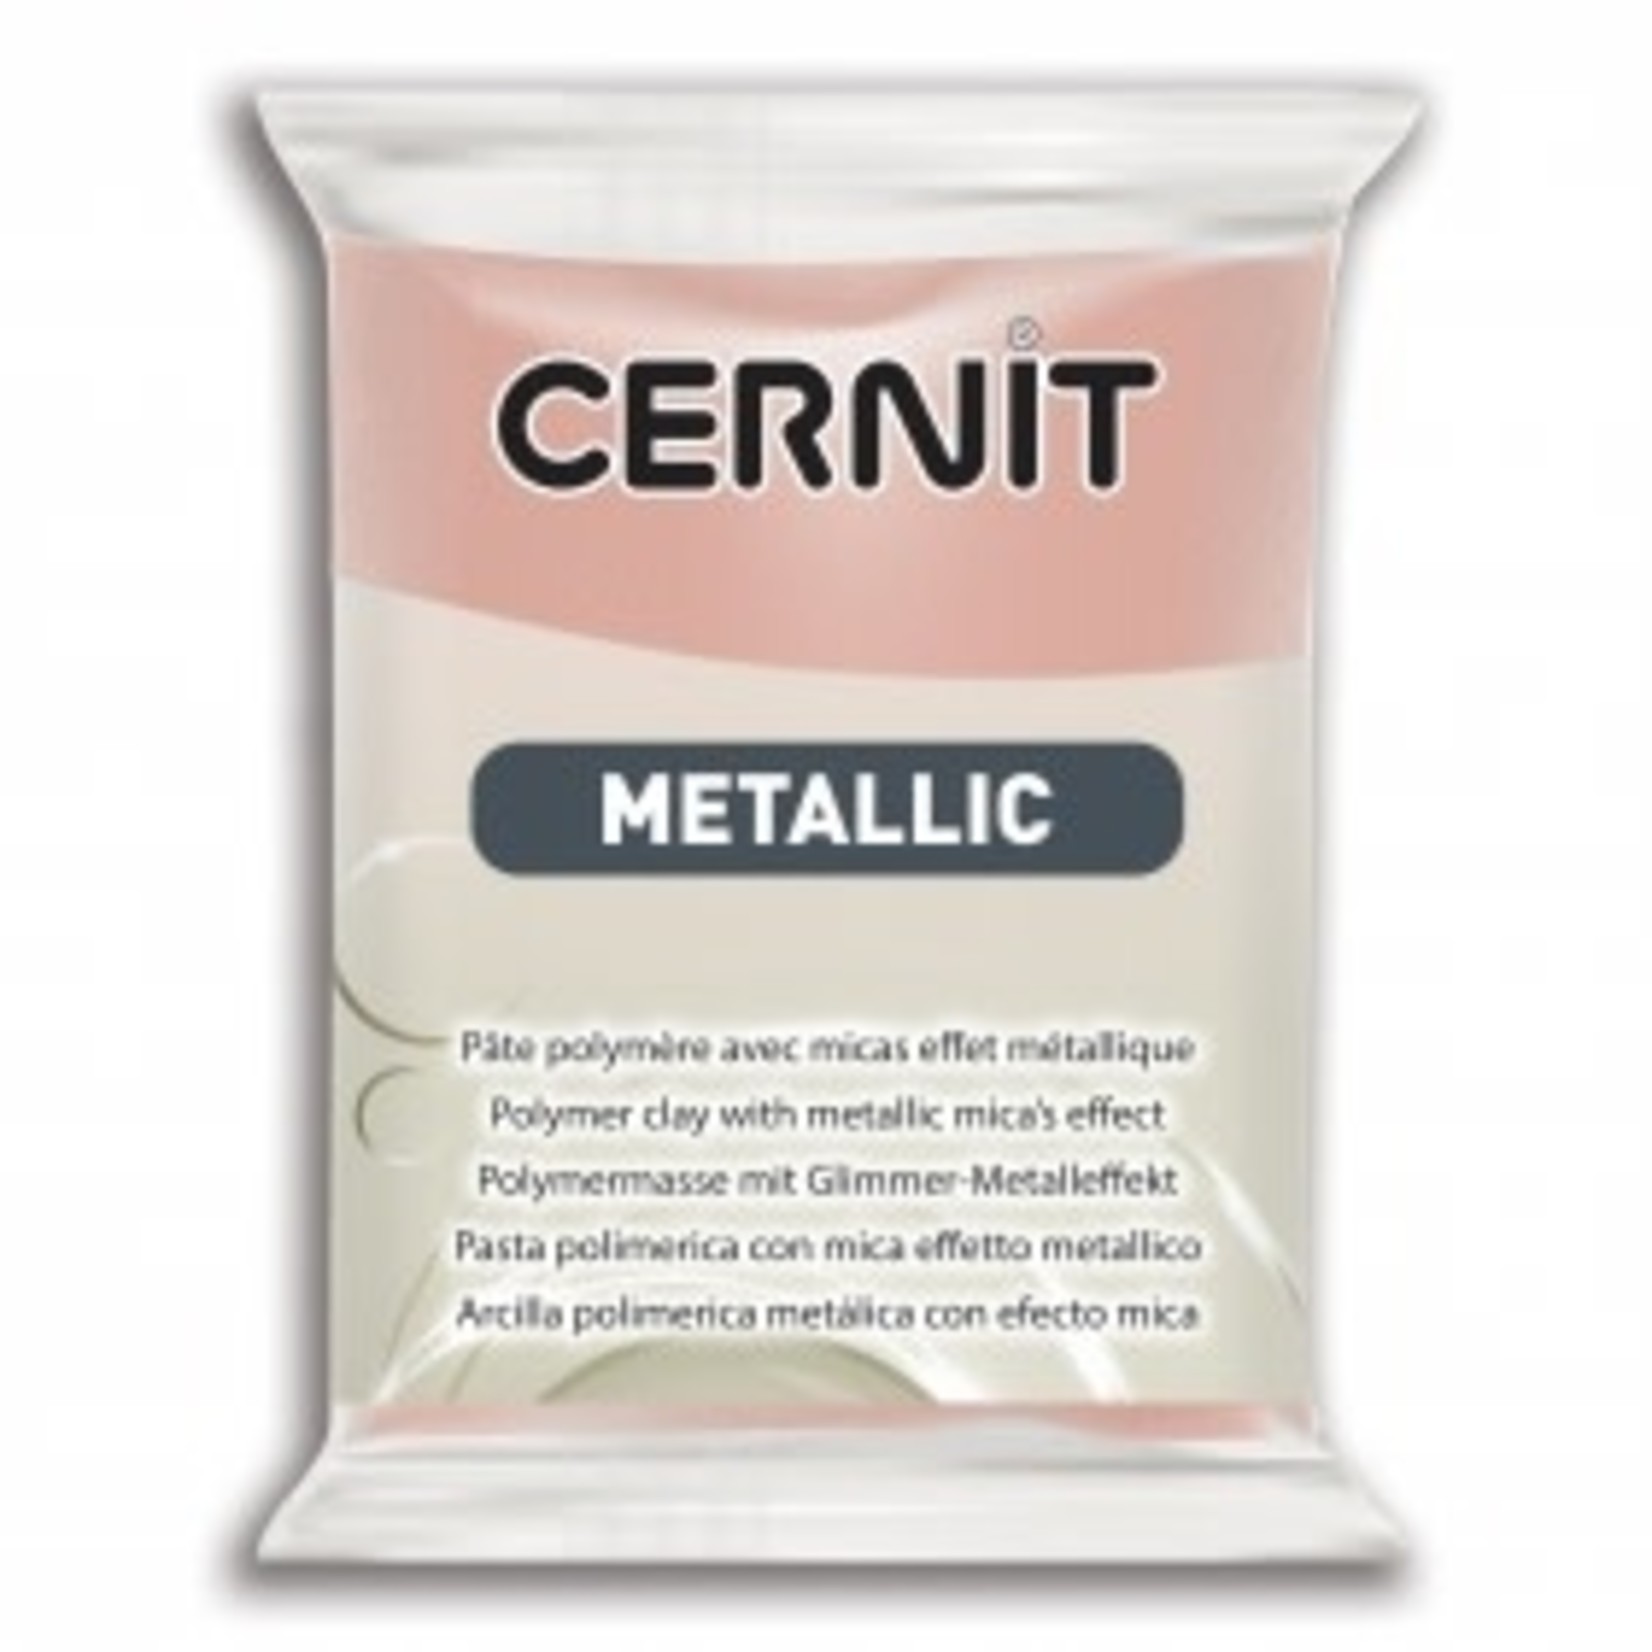 Cernit Cernit Metallic 56g Pink Gold